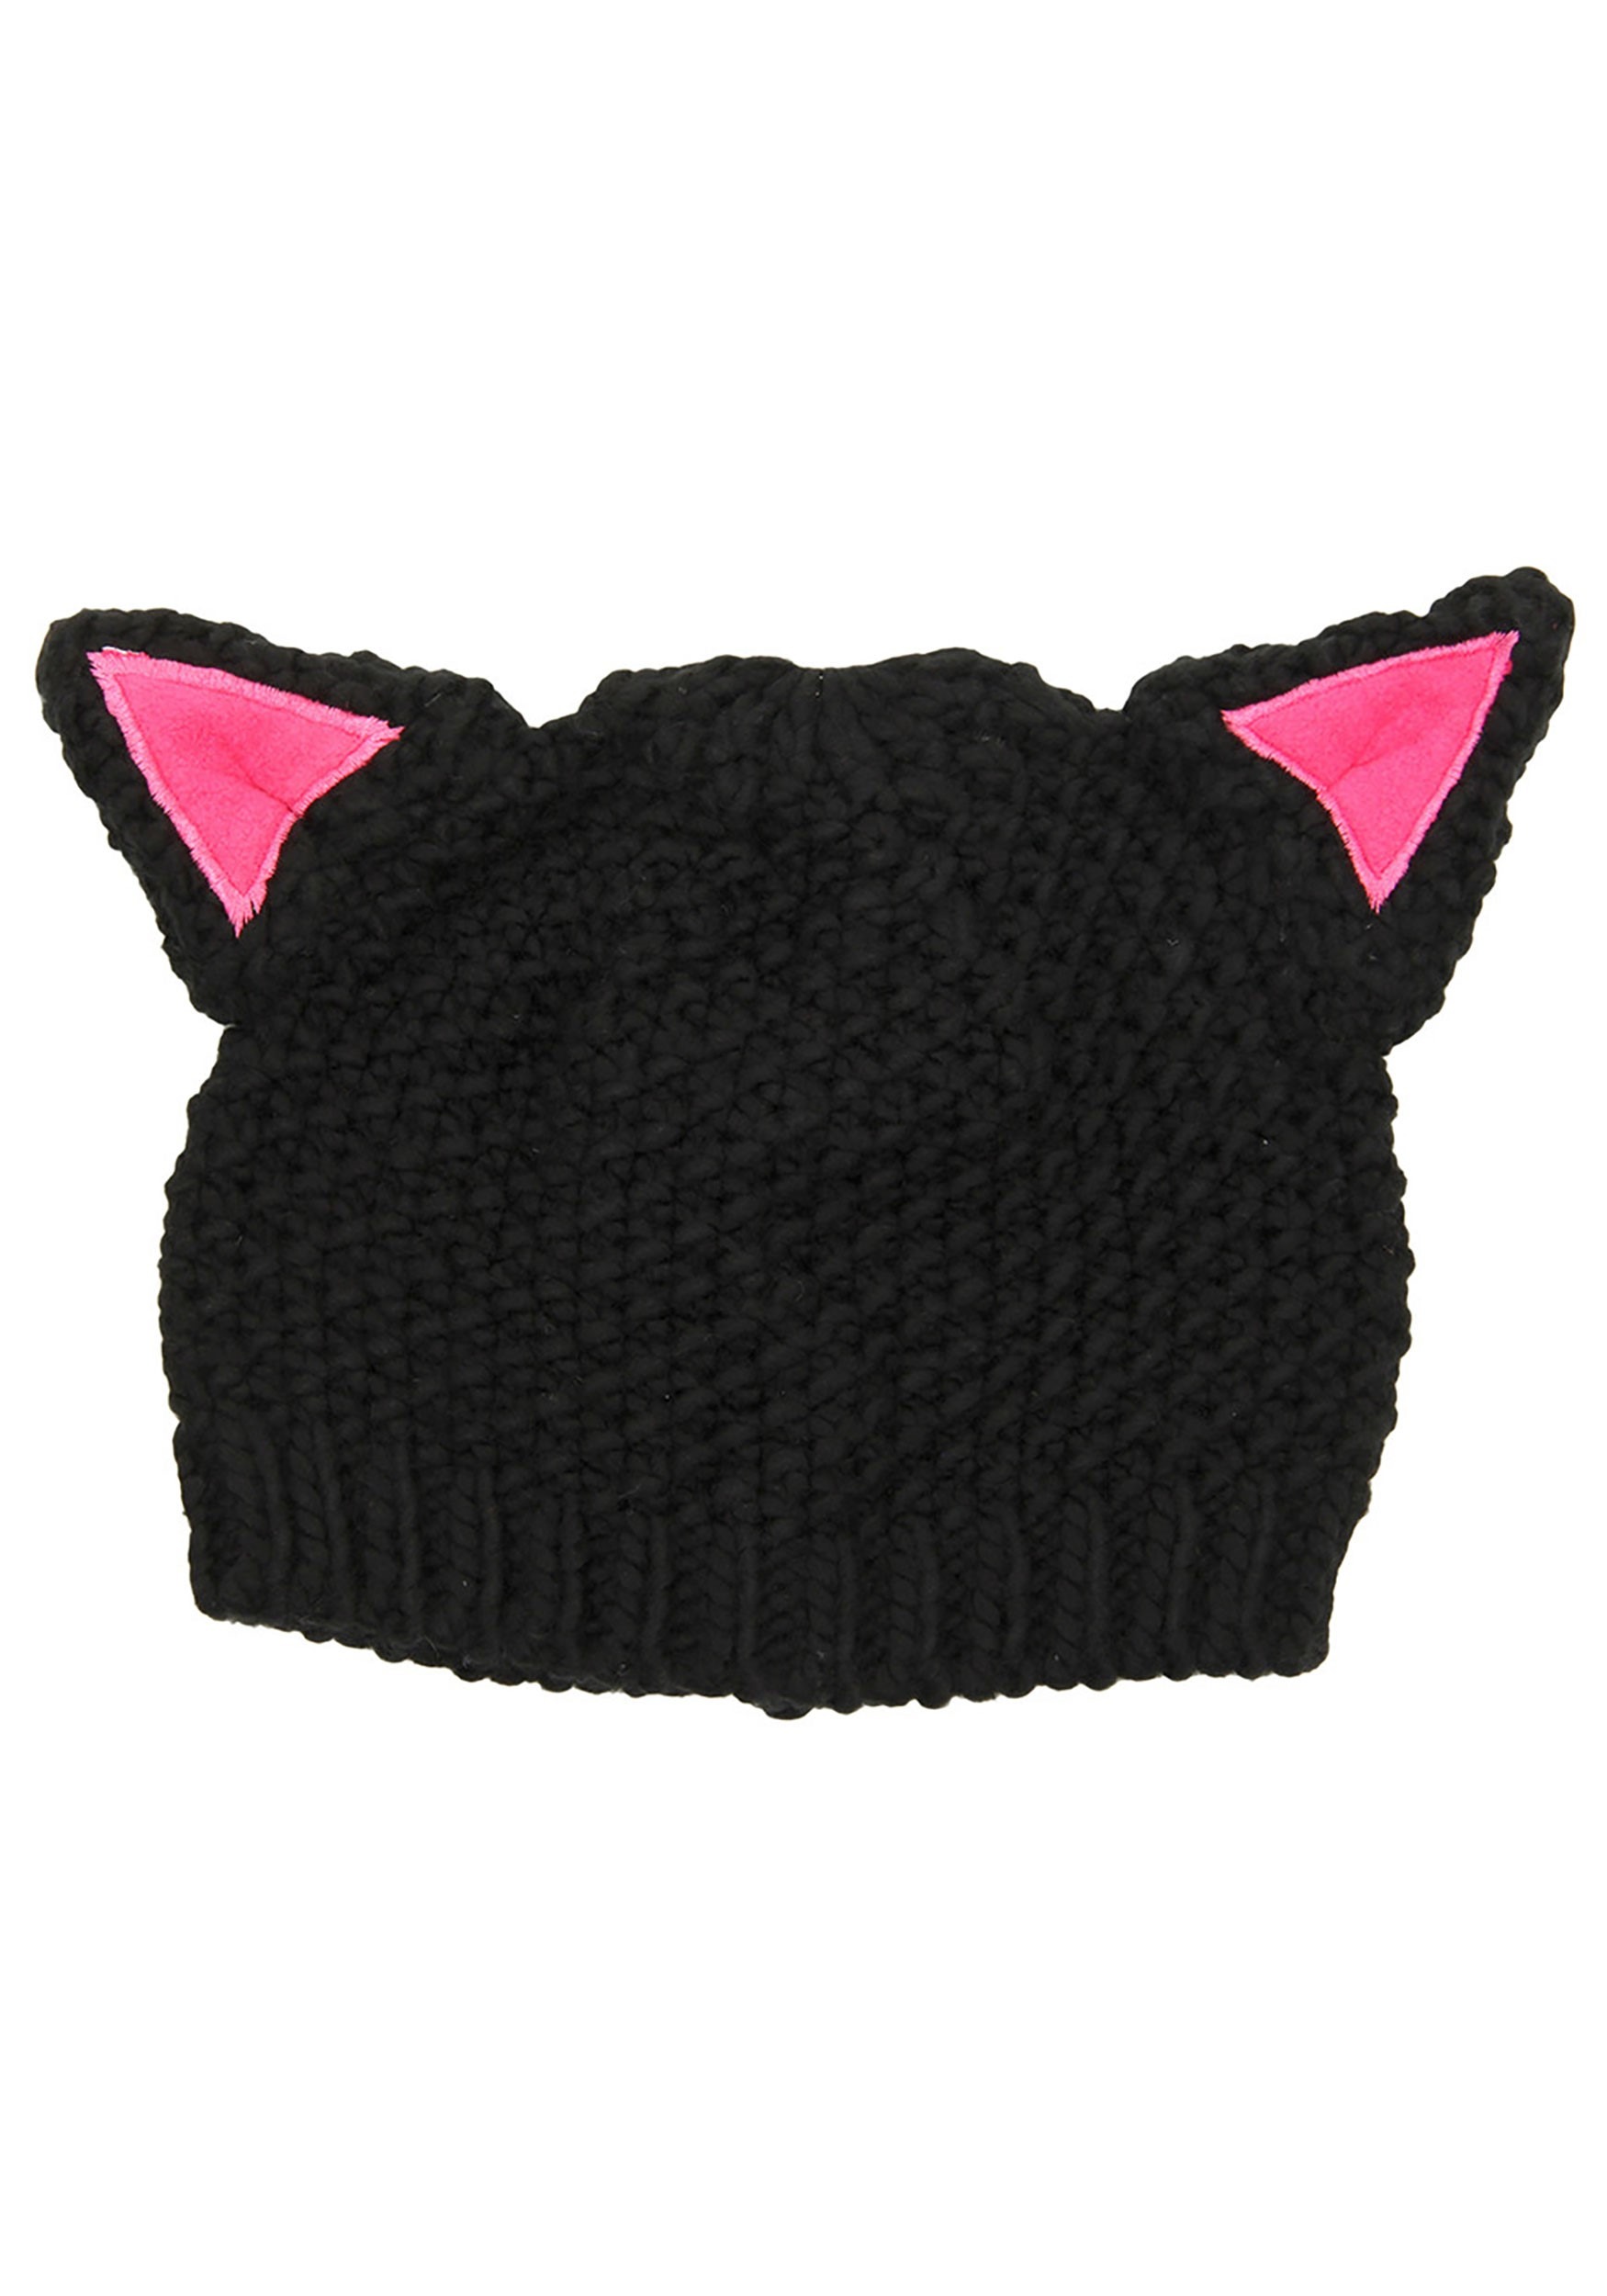 Black Cat Knit Beanie